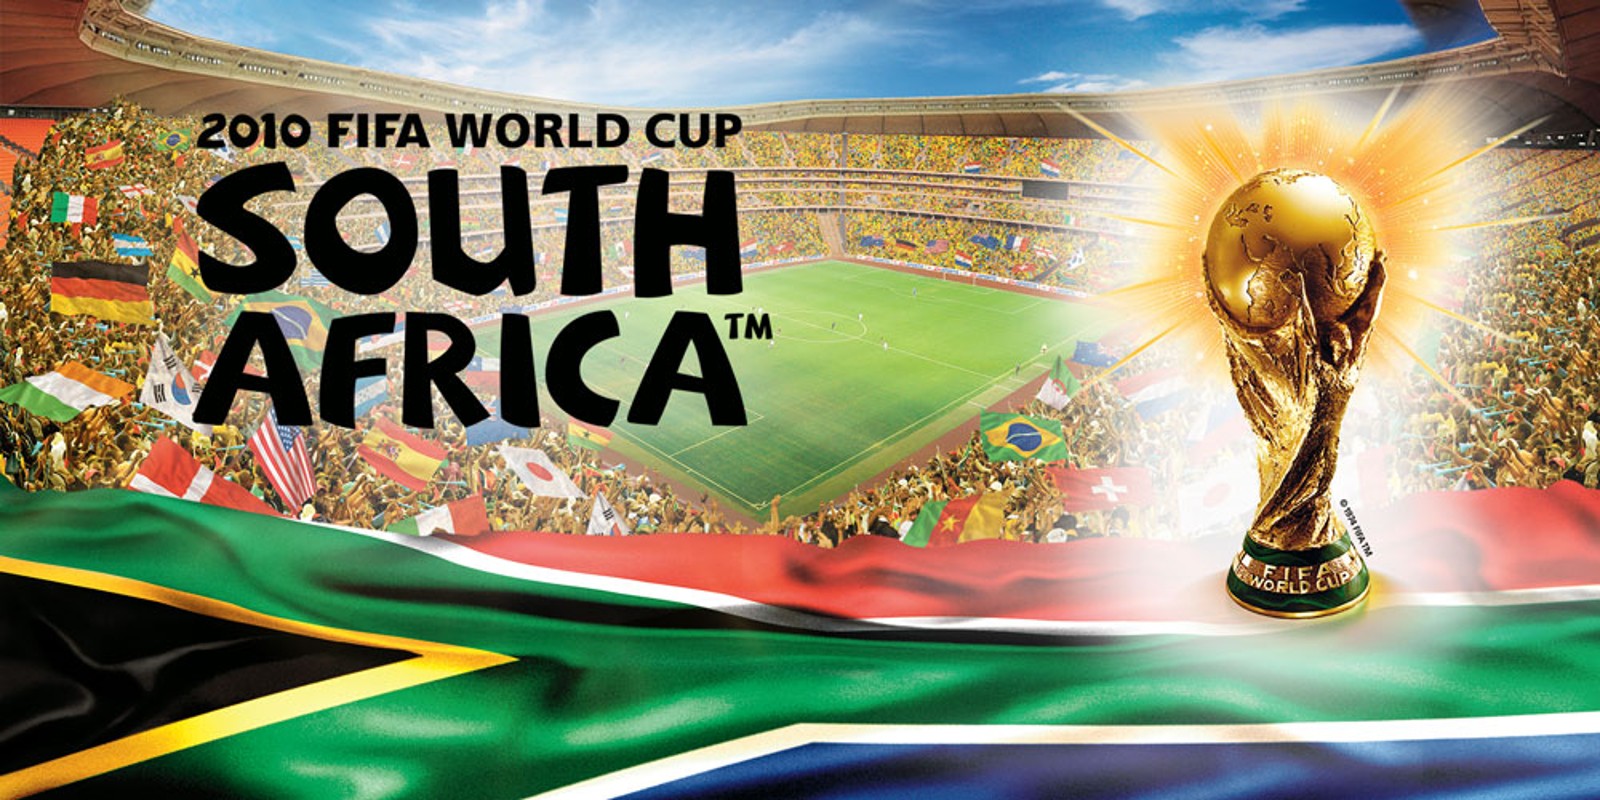 Mondiali FIFA Sudafrica 2010